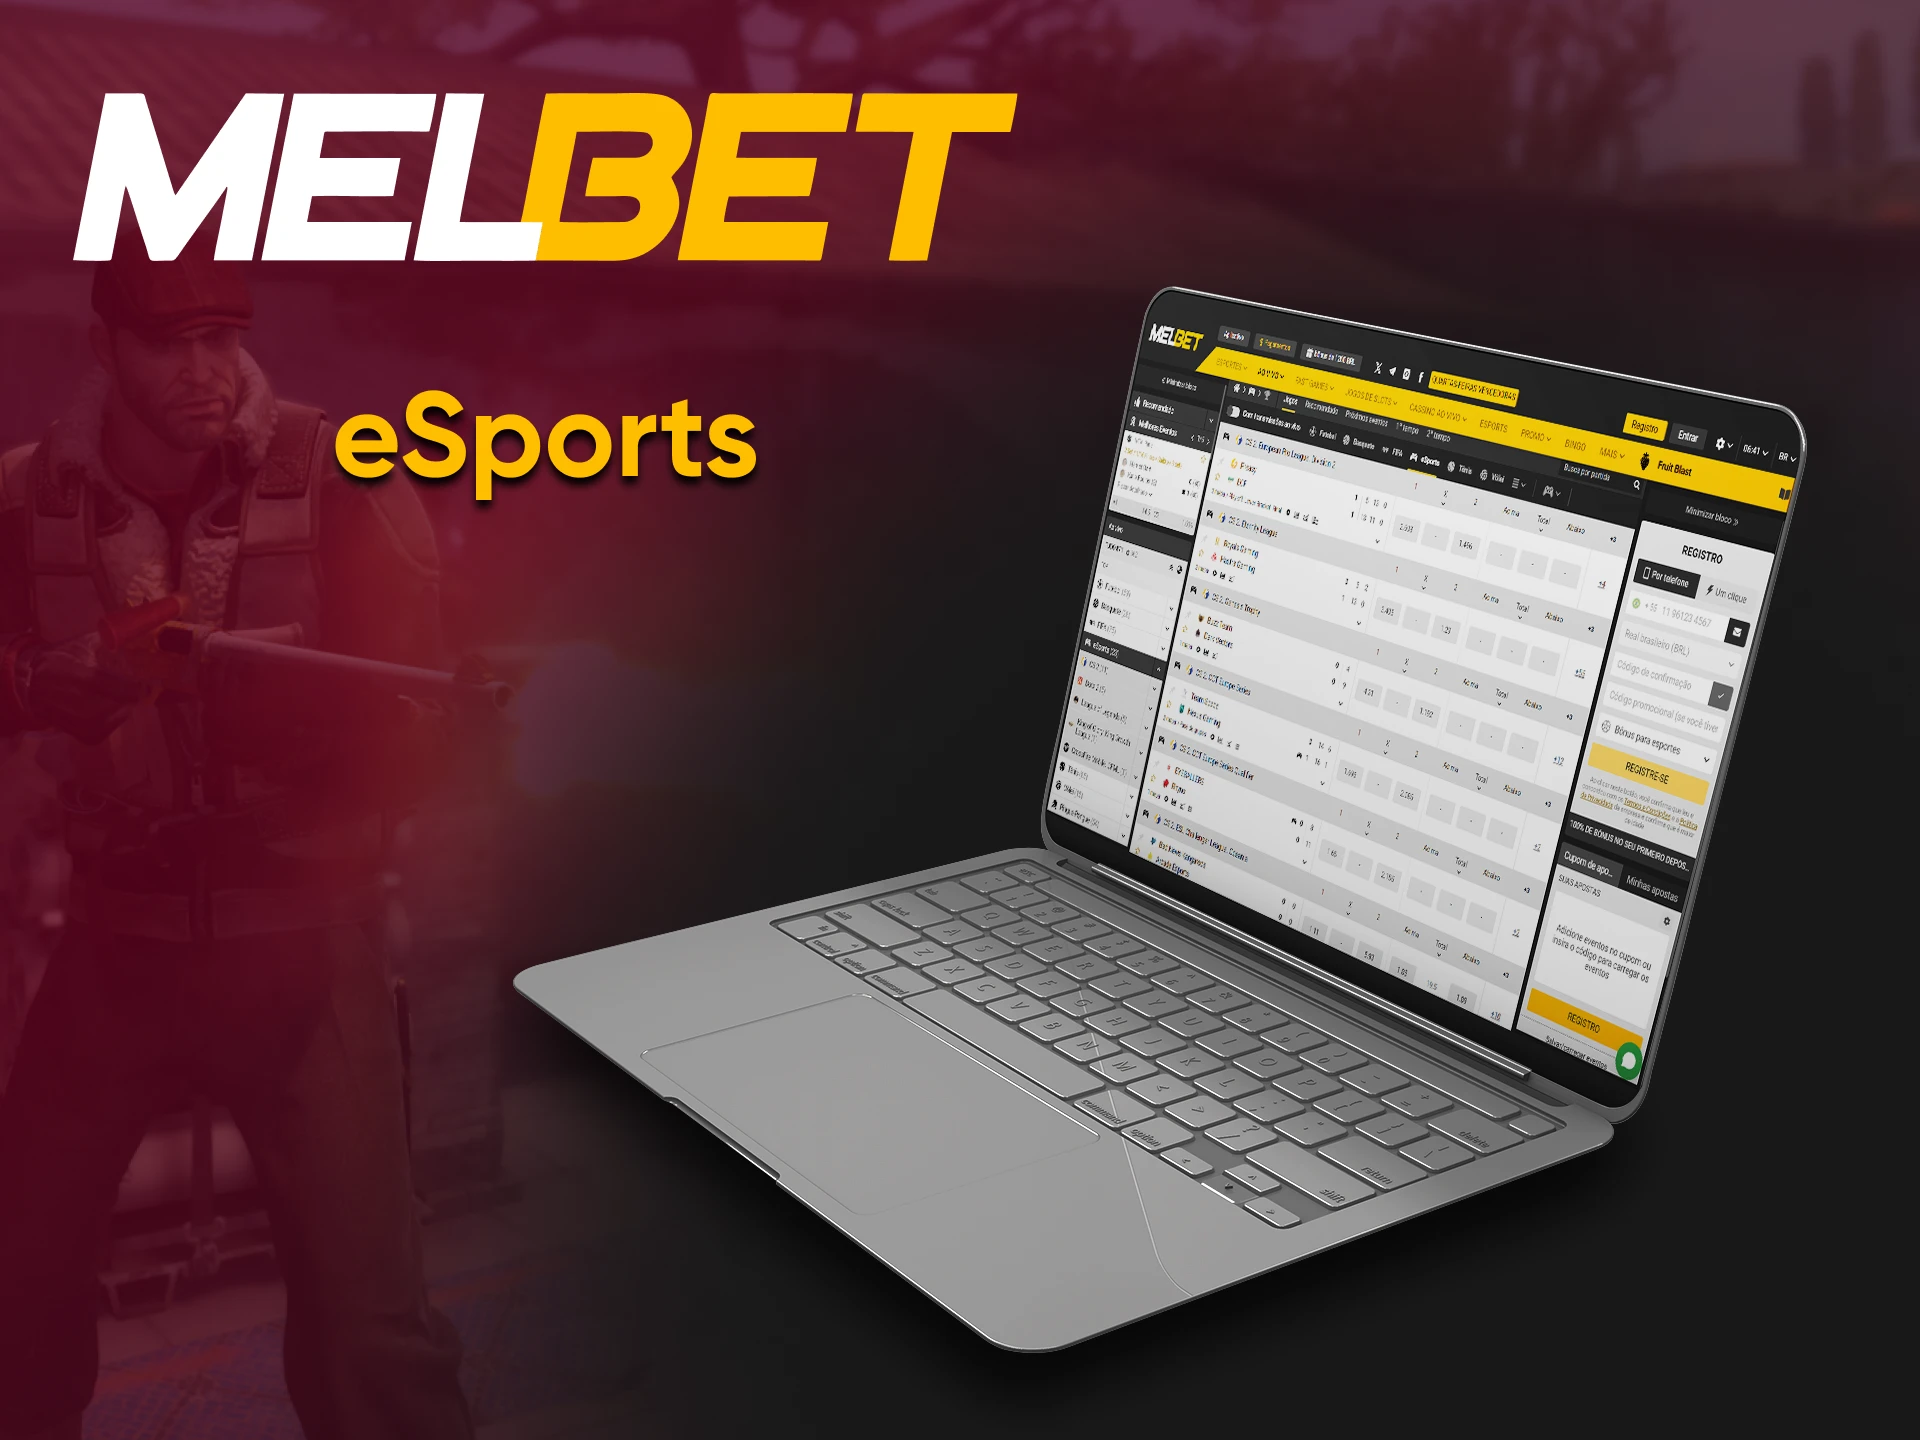 Escolha eSports da Melbet para apostas esportivas.